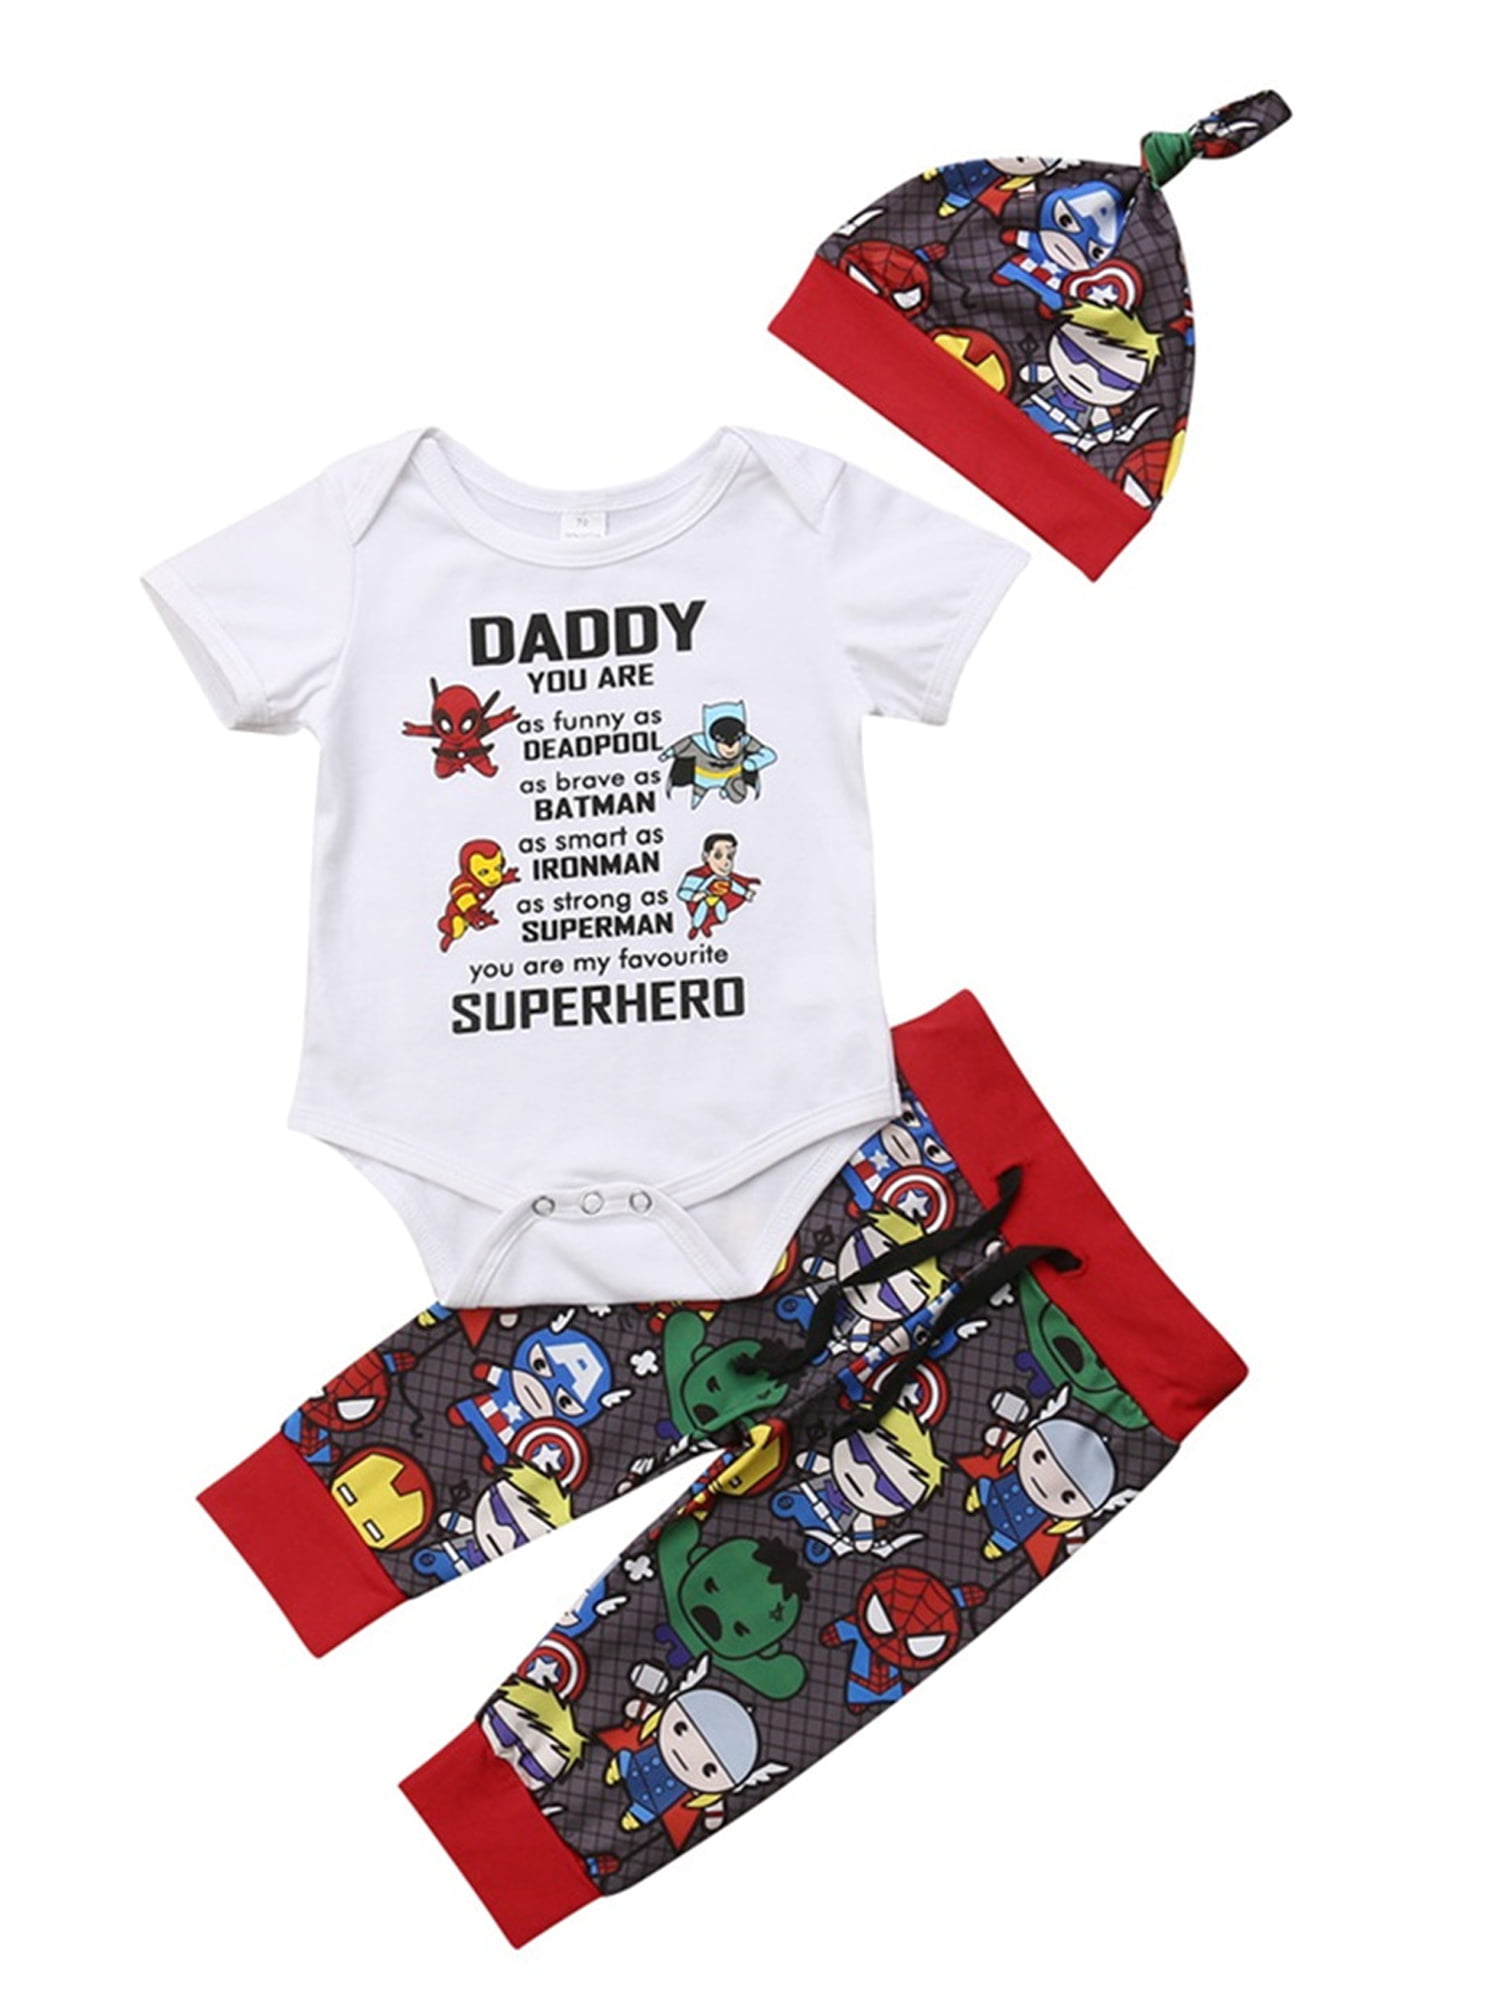 US Newborn Toddler Baby Boy Outfit Superhero Romper T-shirt Pants Hat 3pcs Set 